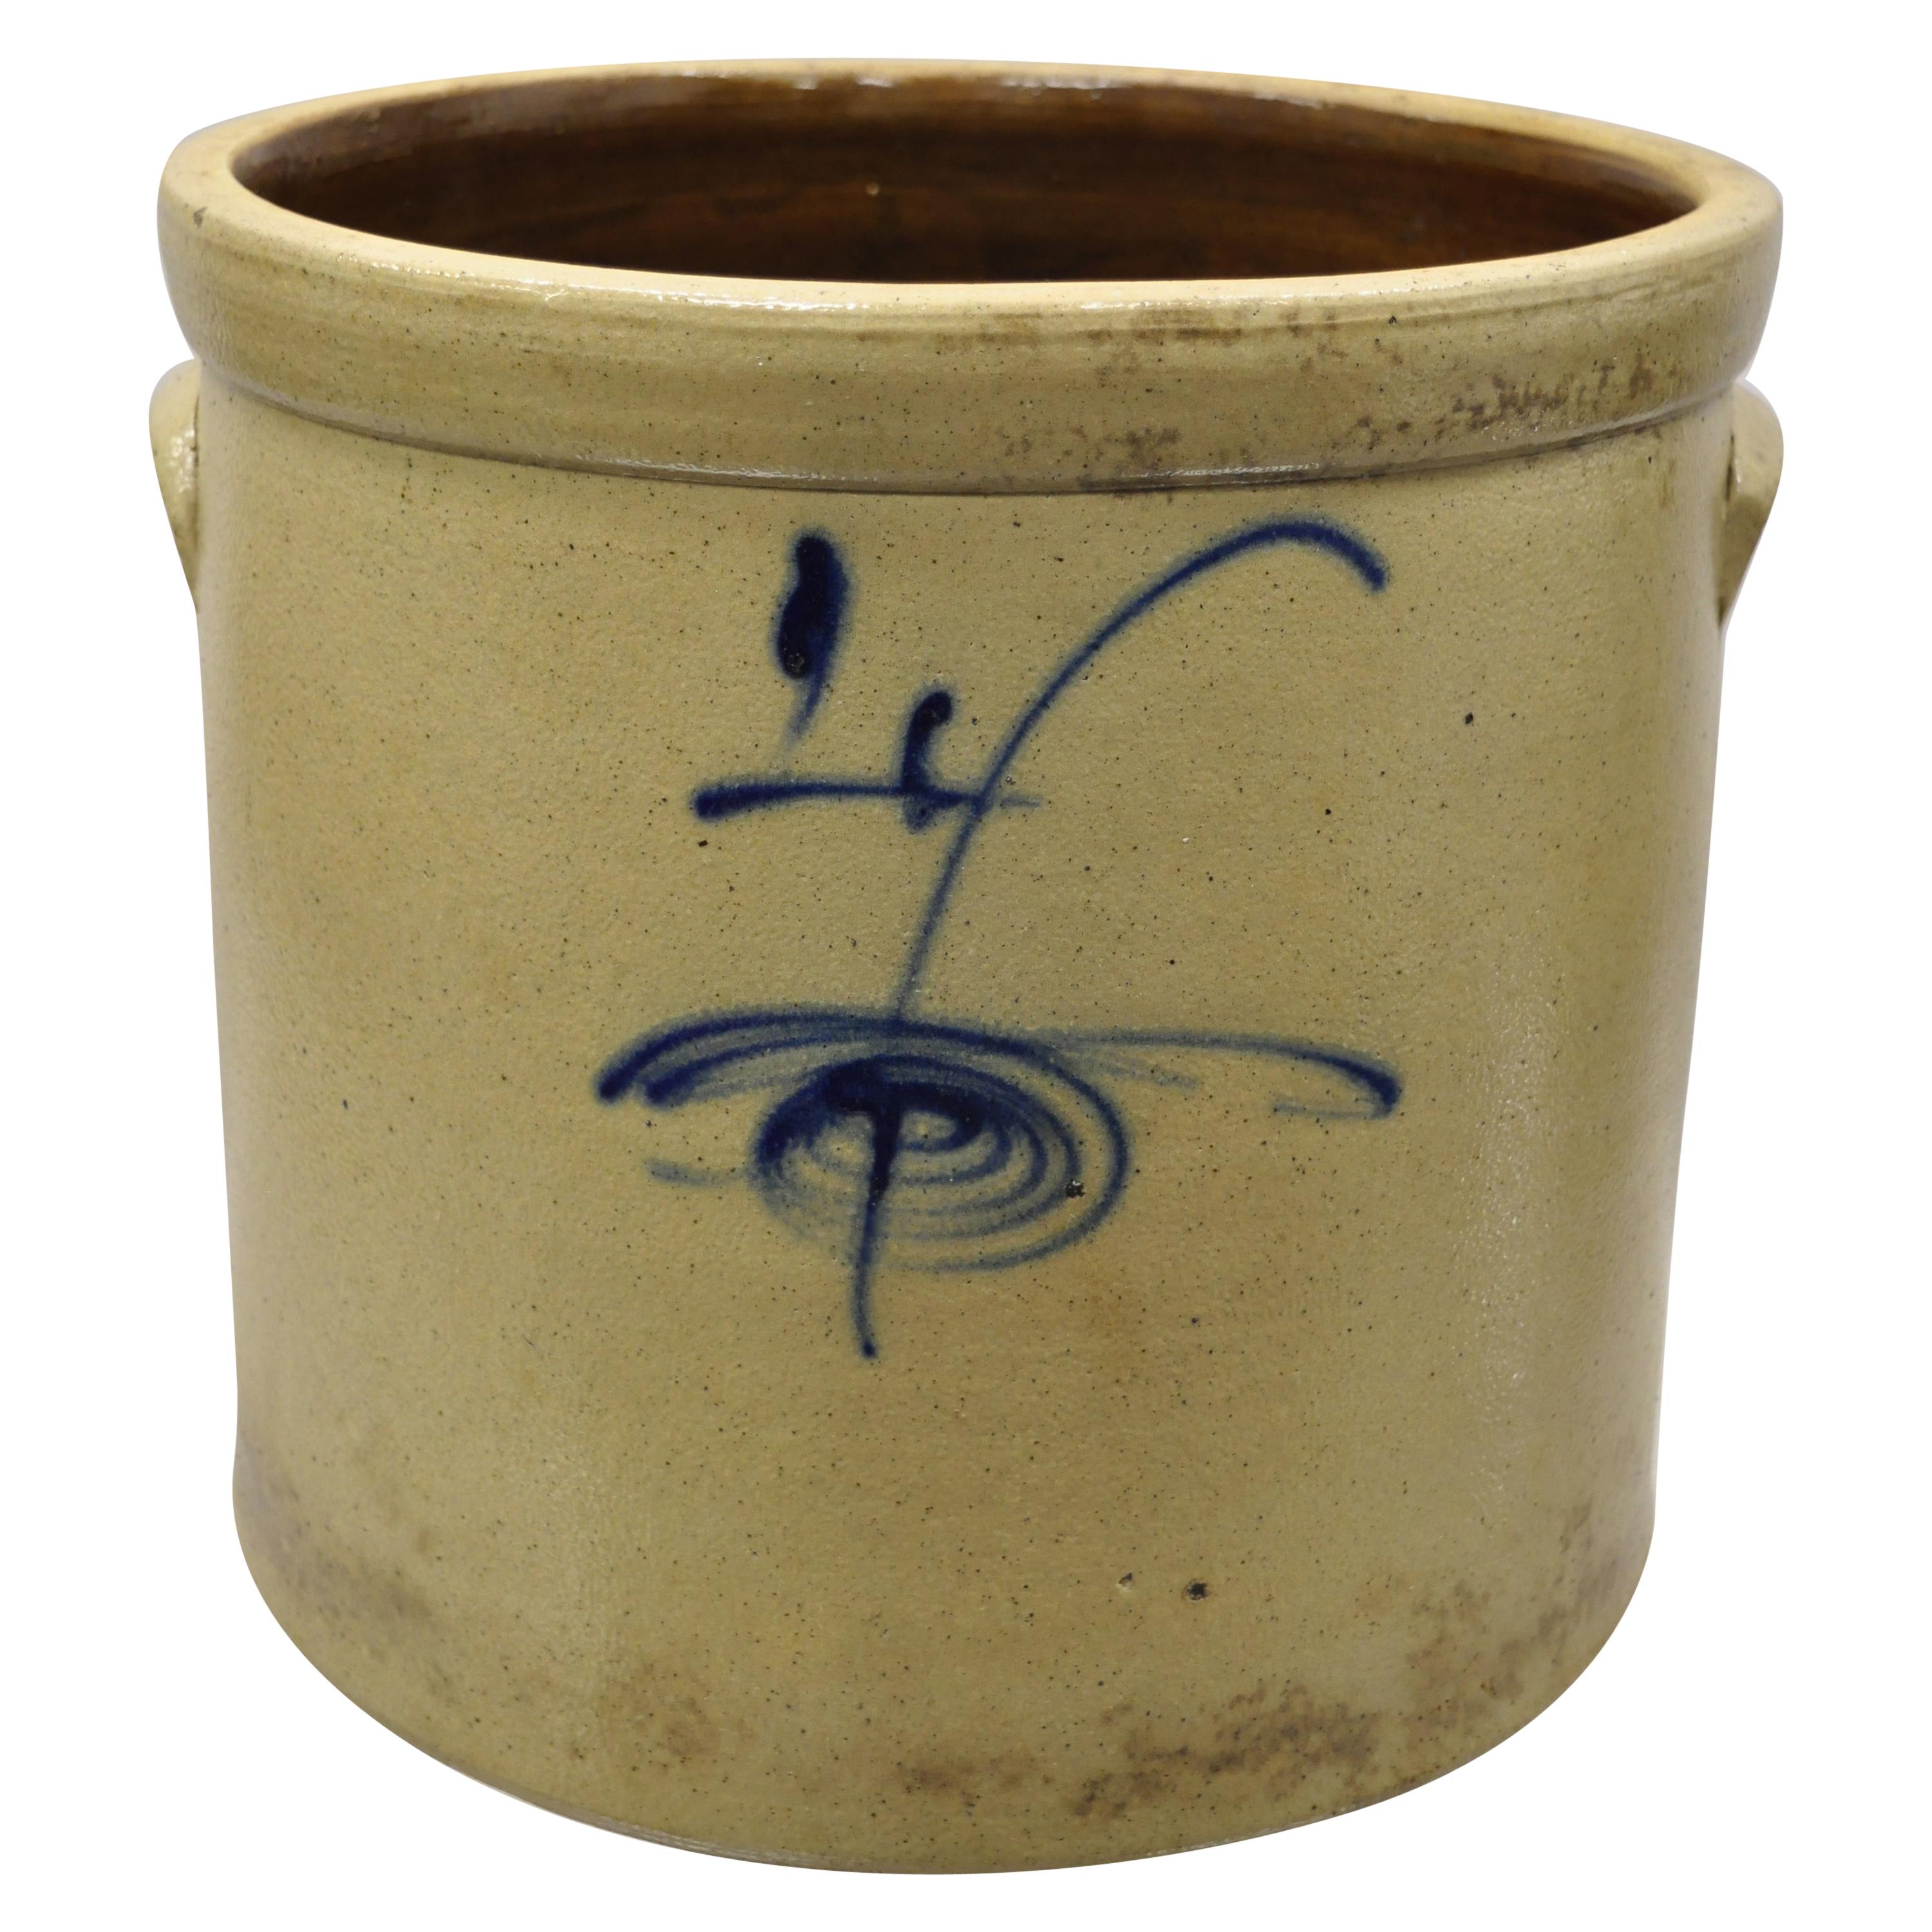 Antique Salt Glazed Stoneware Pottery Crock Pot with Cobalt Blue Design